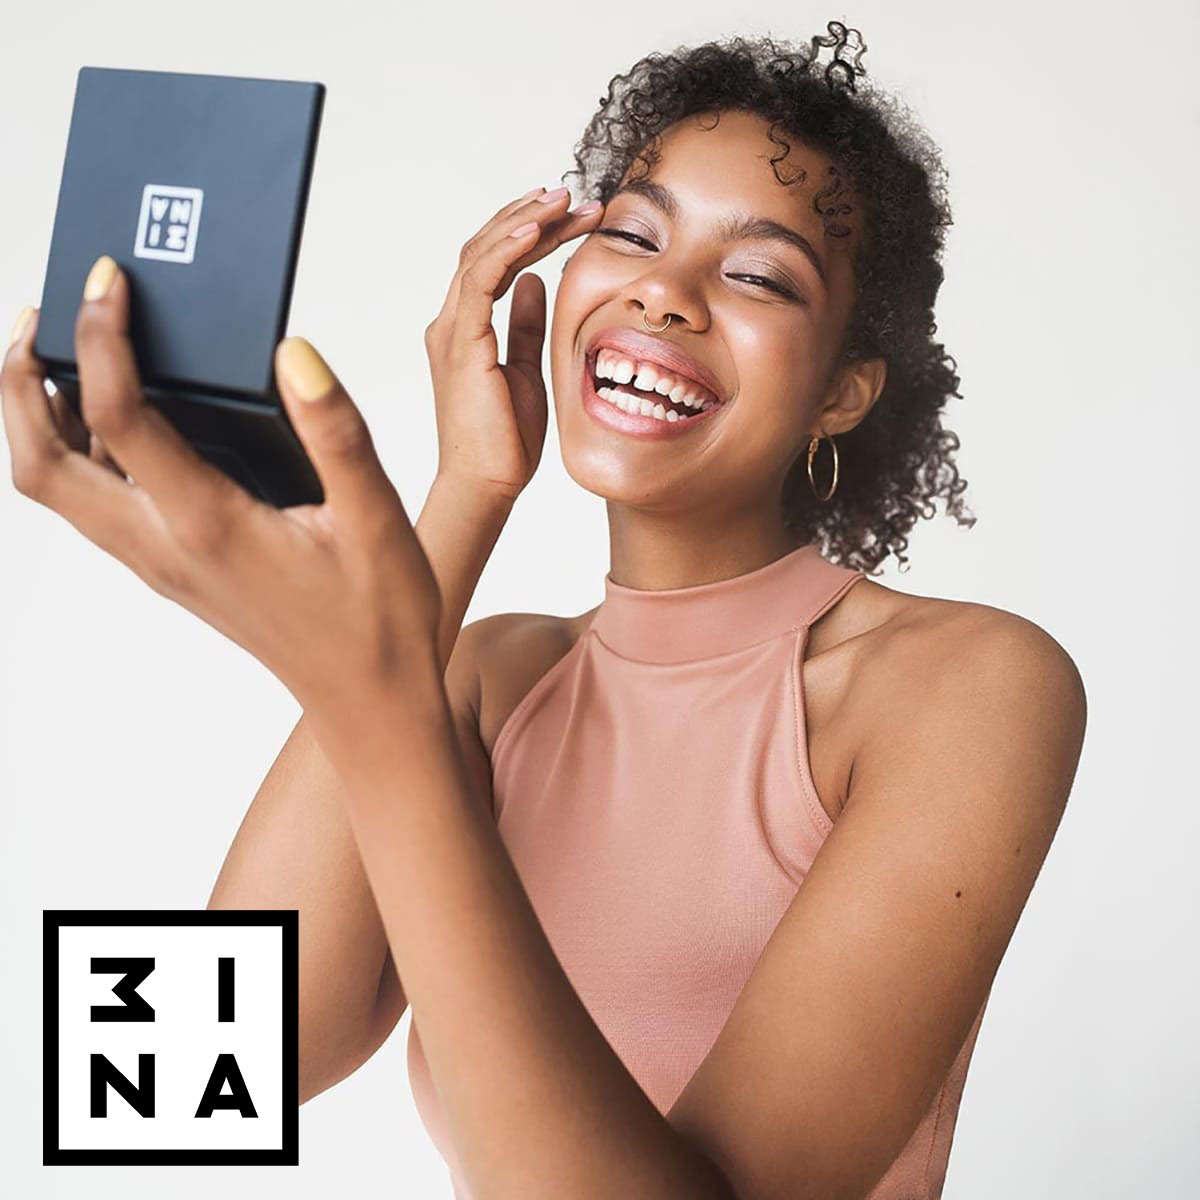 Shooting publicitario realizado por la fotógrafa Noah Pharrell junto a Enri Mür Studio para la marca de cosmética MINA.